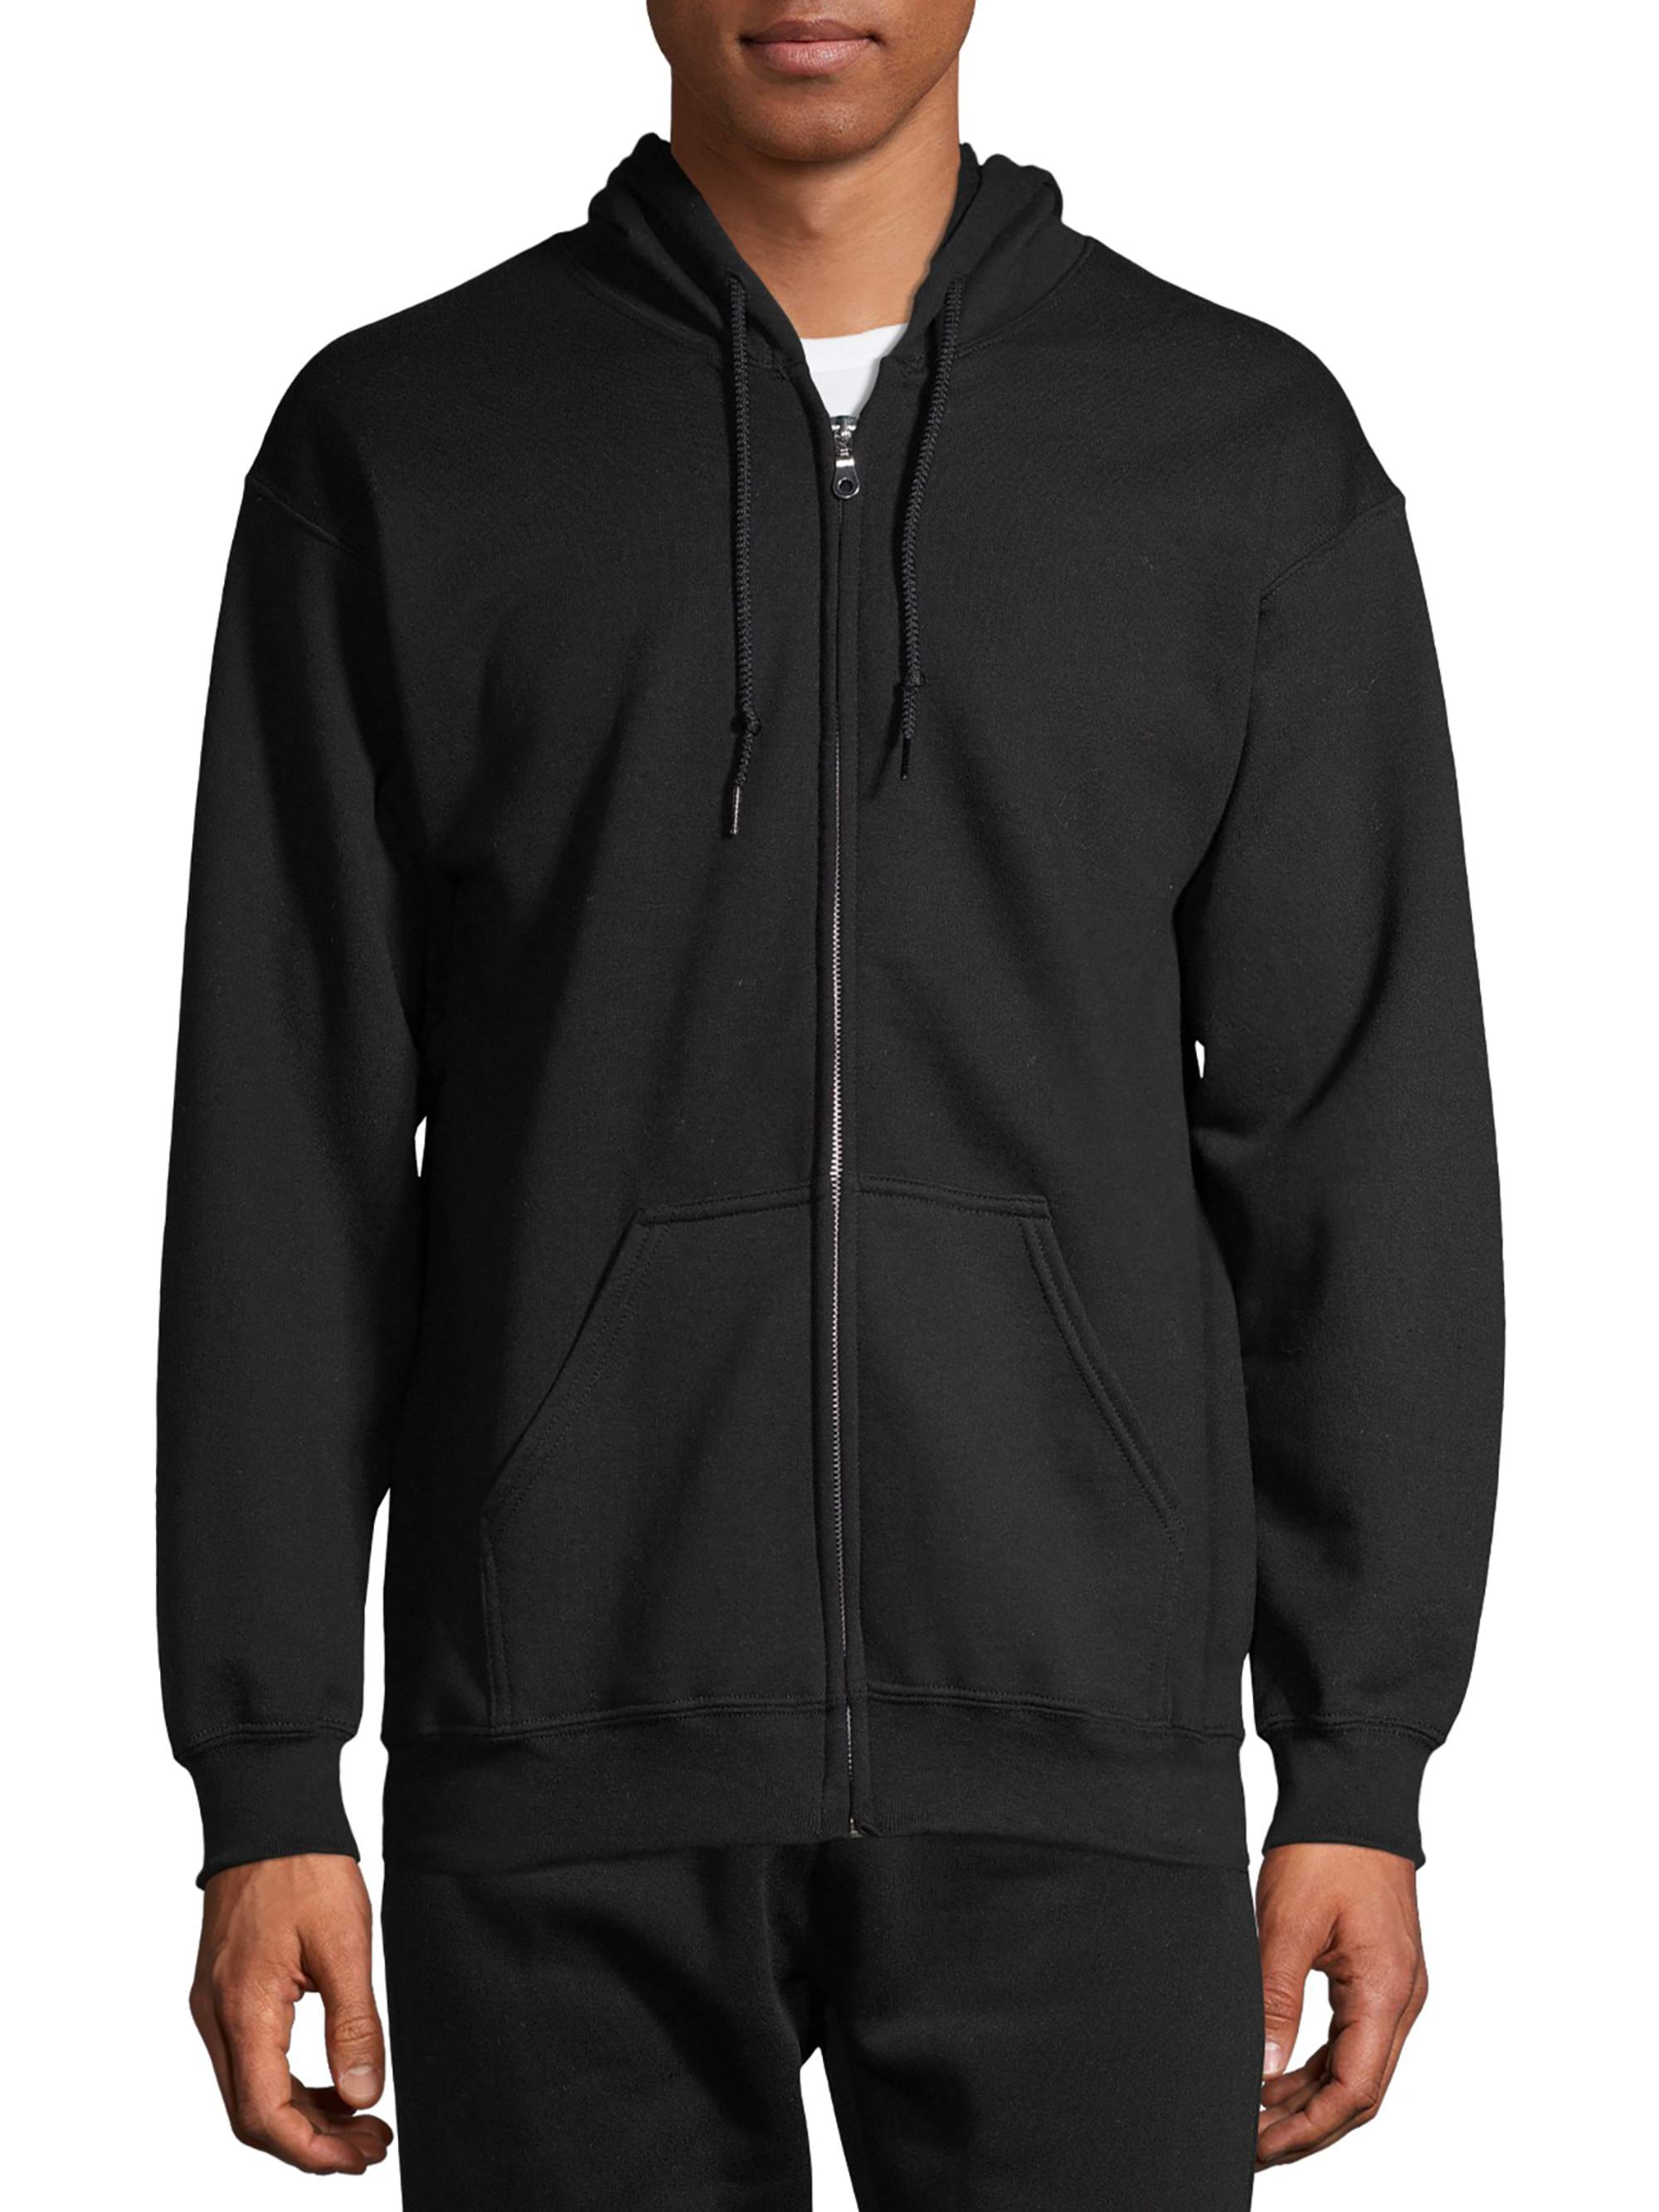 Gildan Unisex Heavy Blend Fleece Full Zip Hooded Sweatshirt, Size Small to 3XL - image 2 of 6